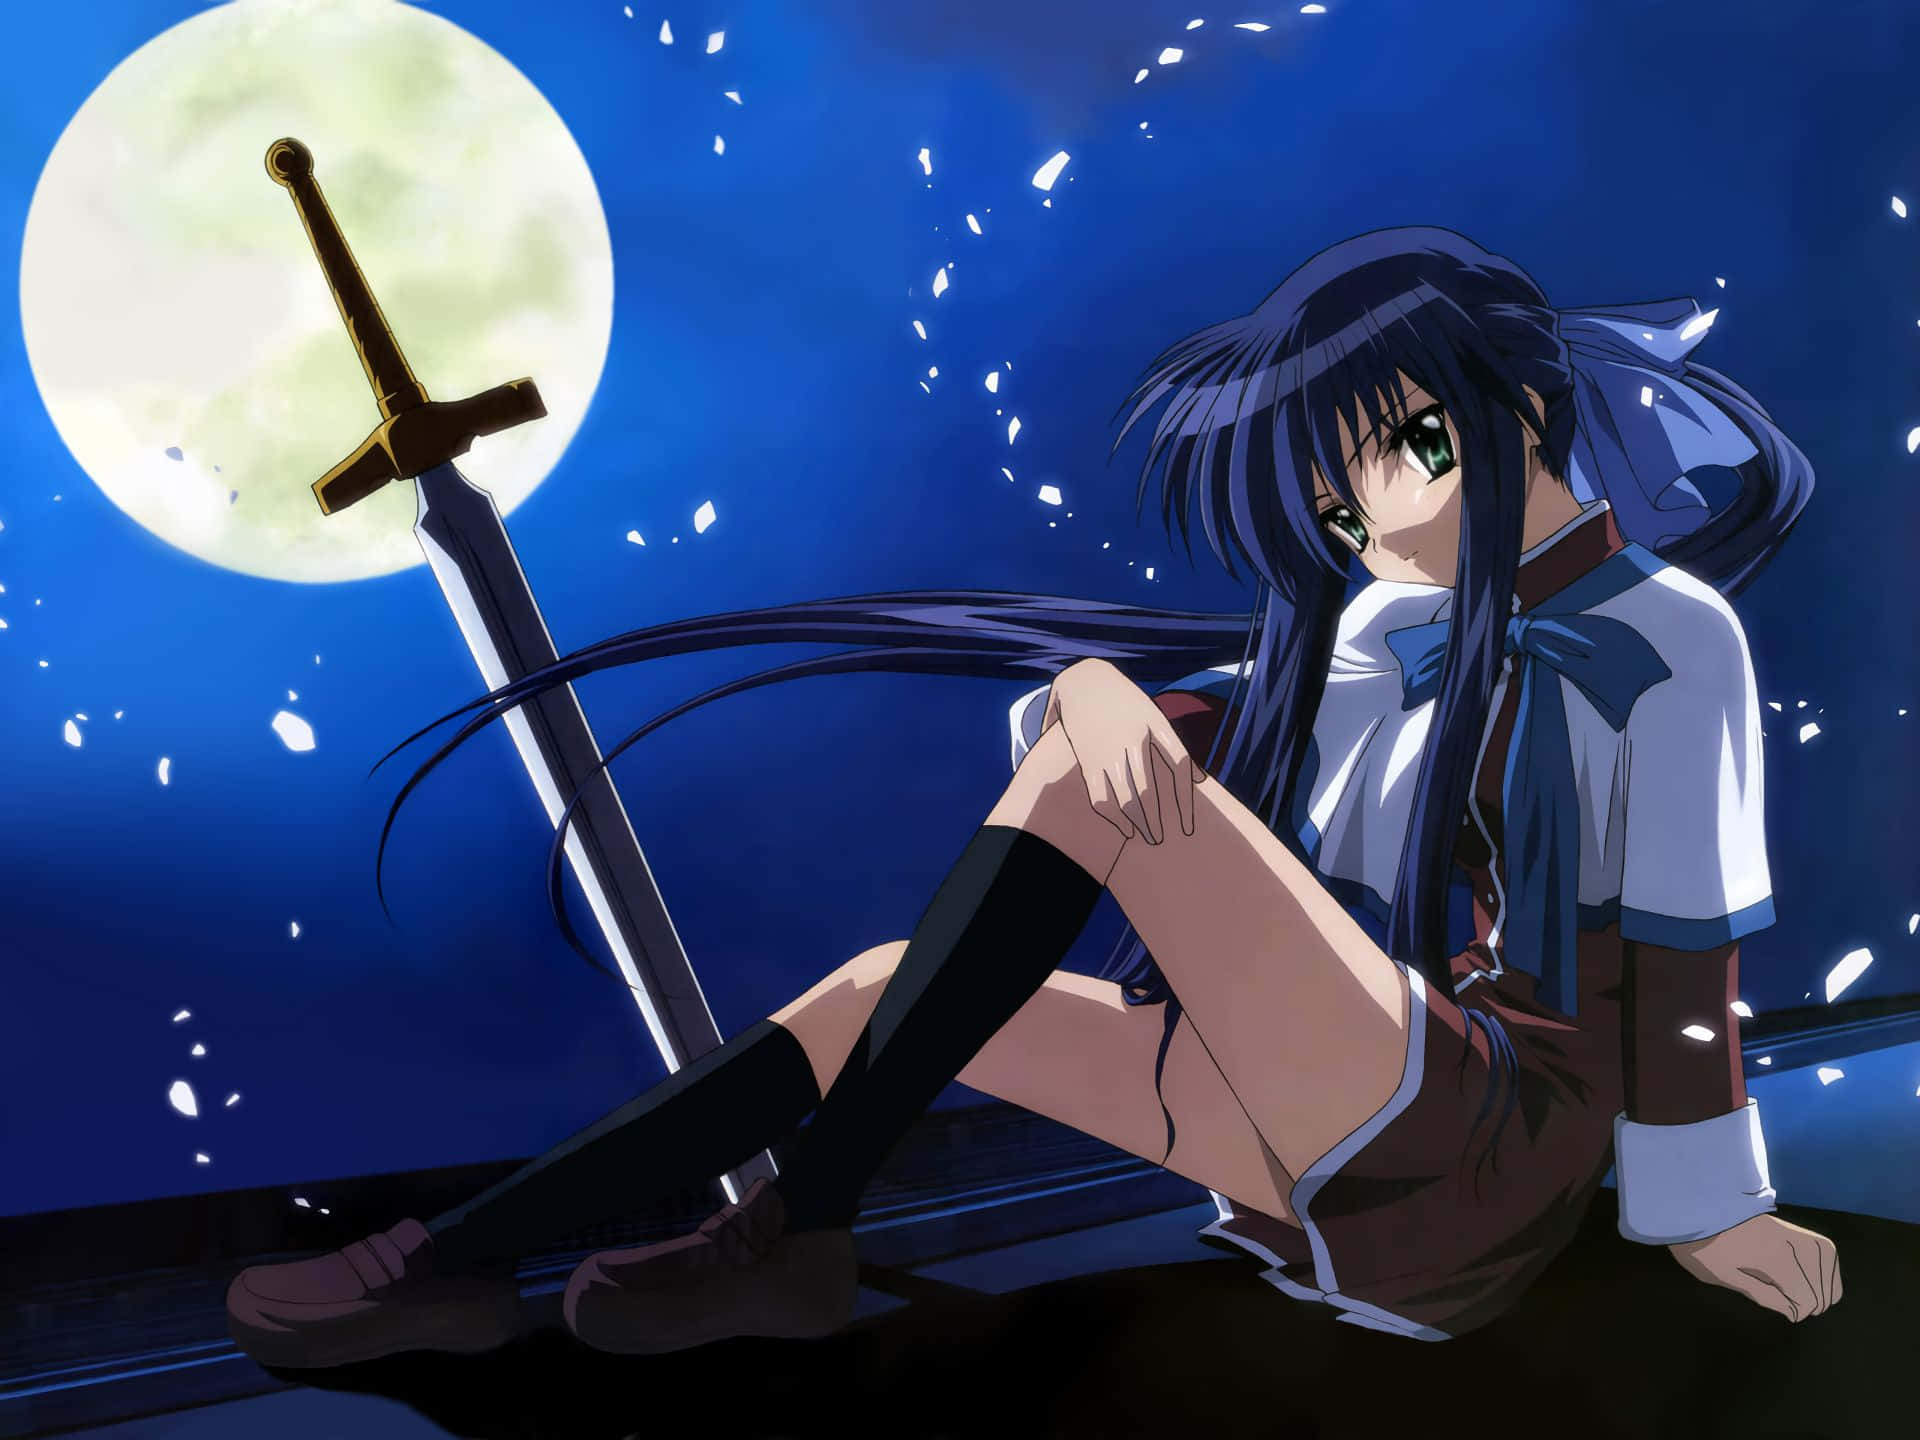 Moon sword. Май Кавасуми.